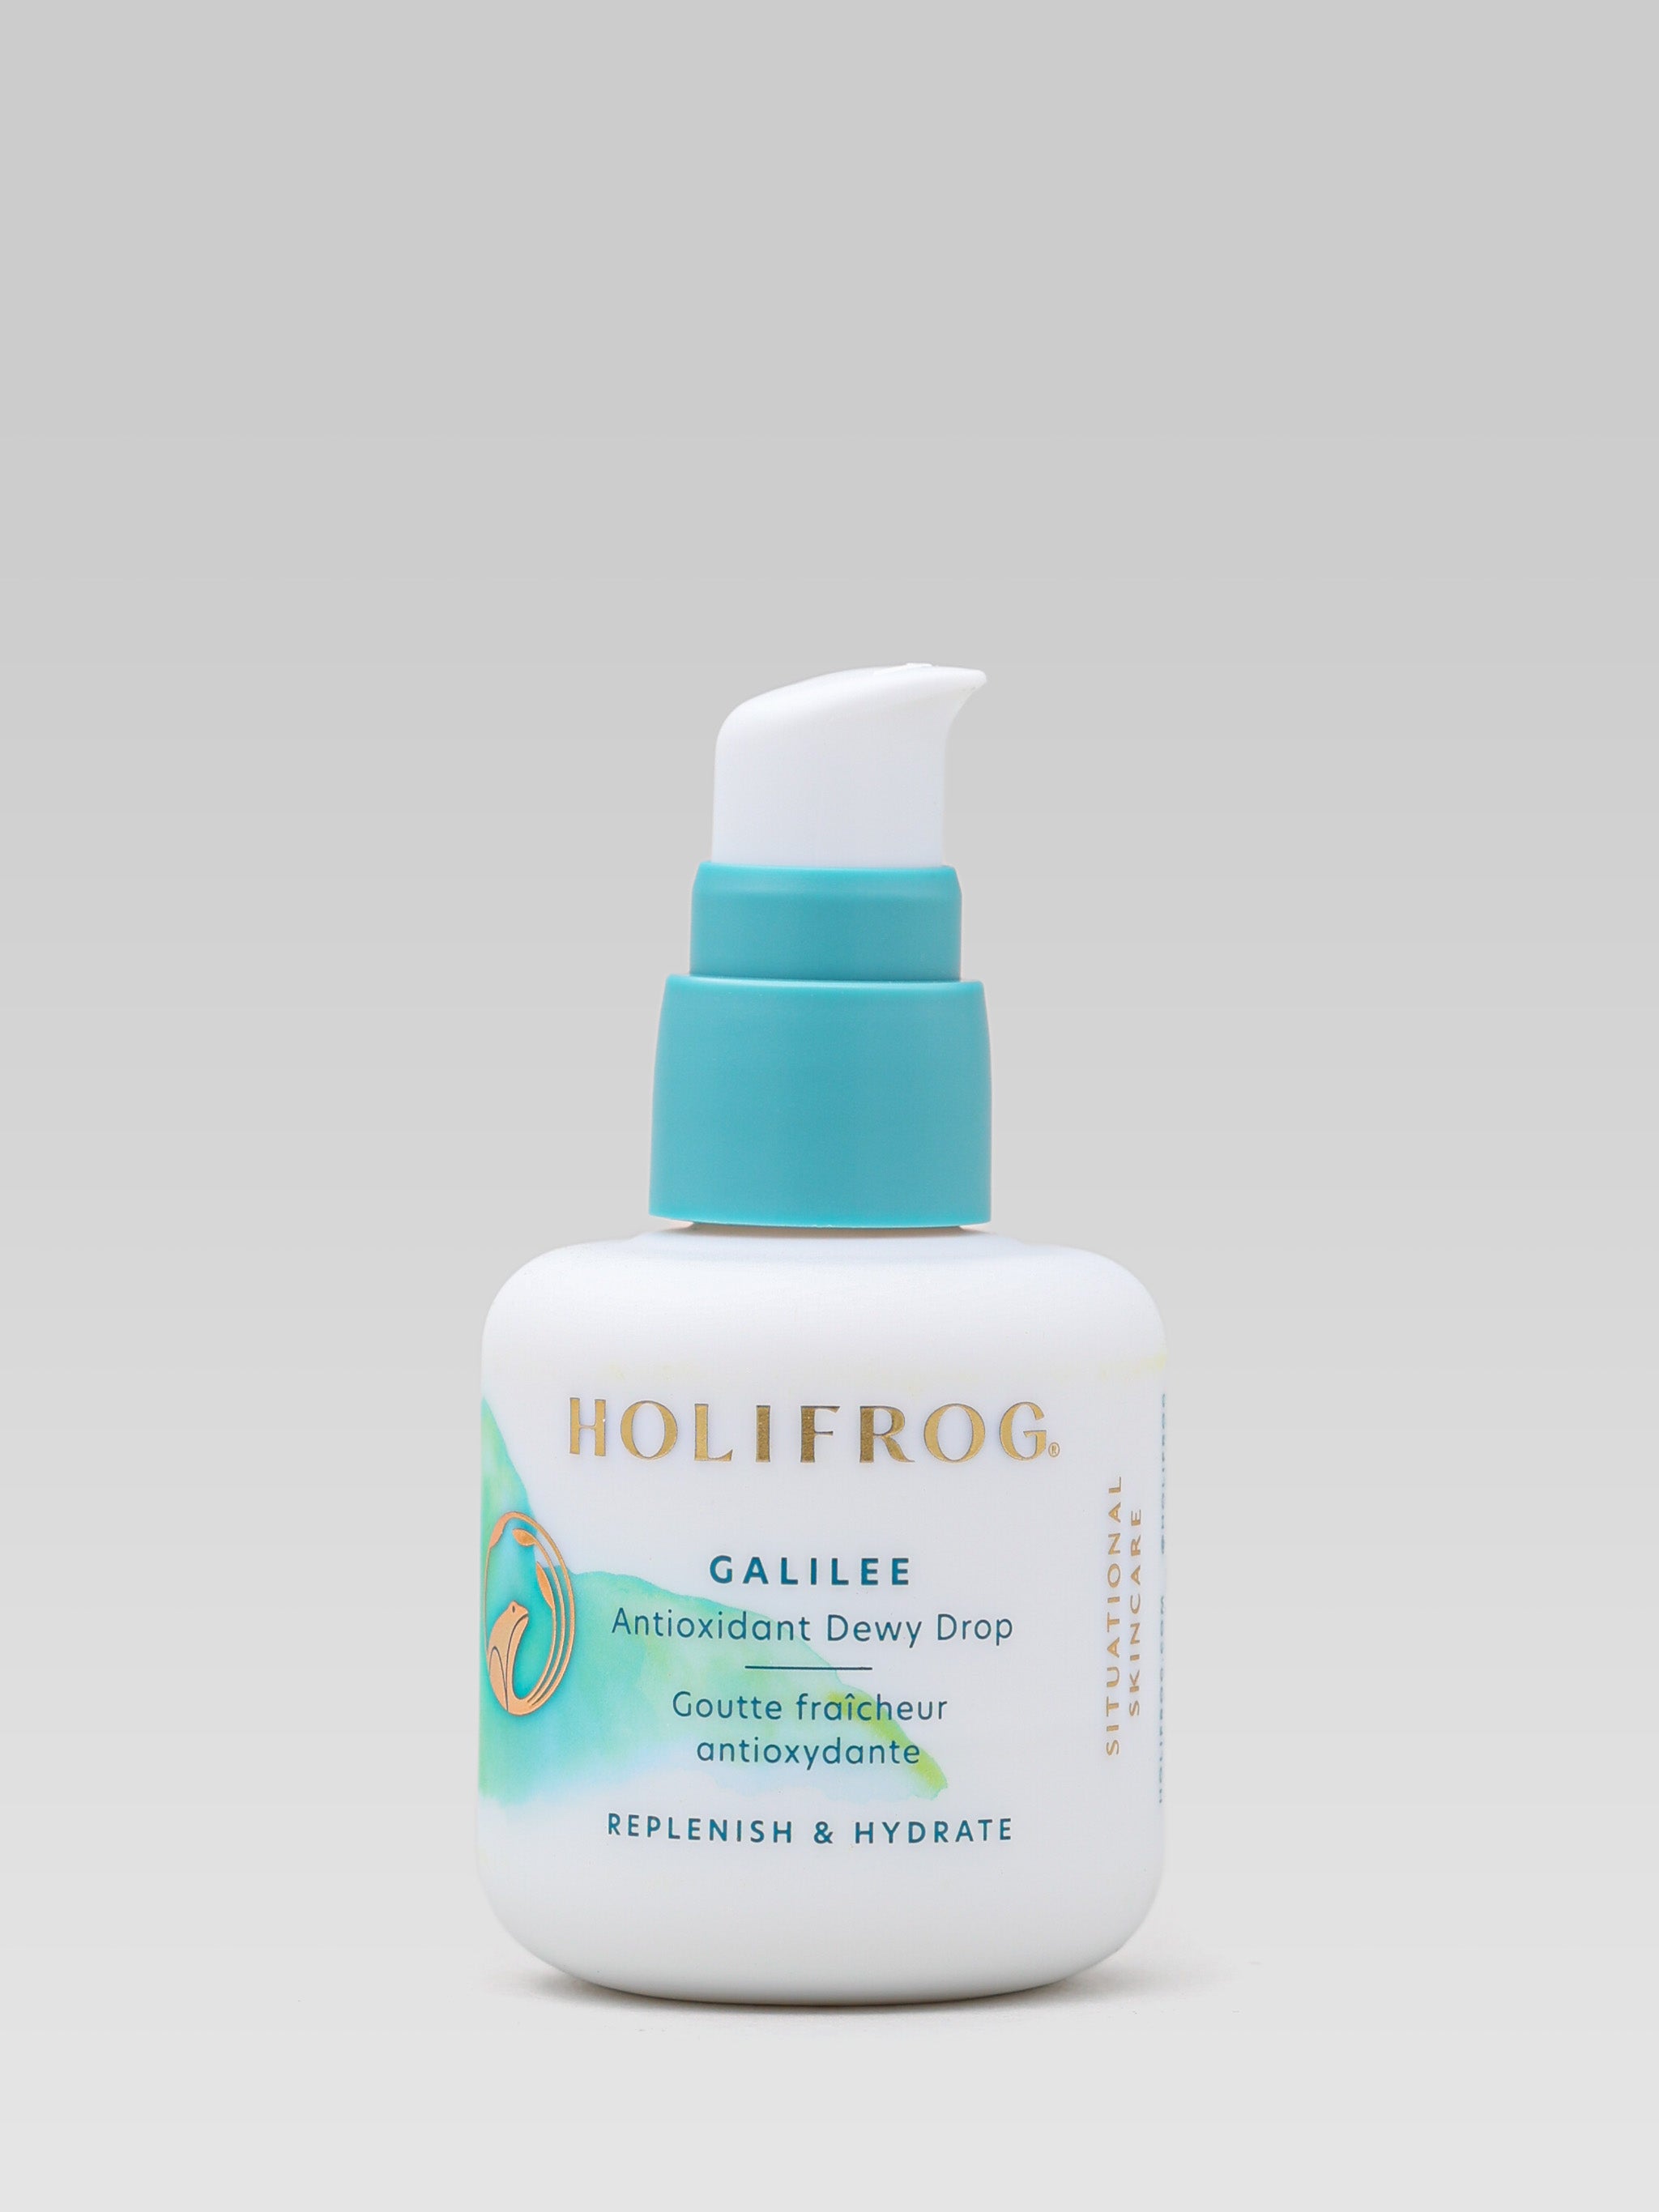 HOLIFROG Galilee Antioxidant Dewy Drop product shot